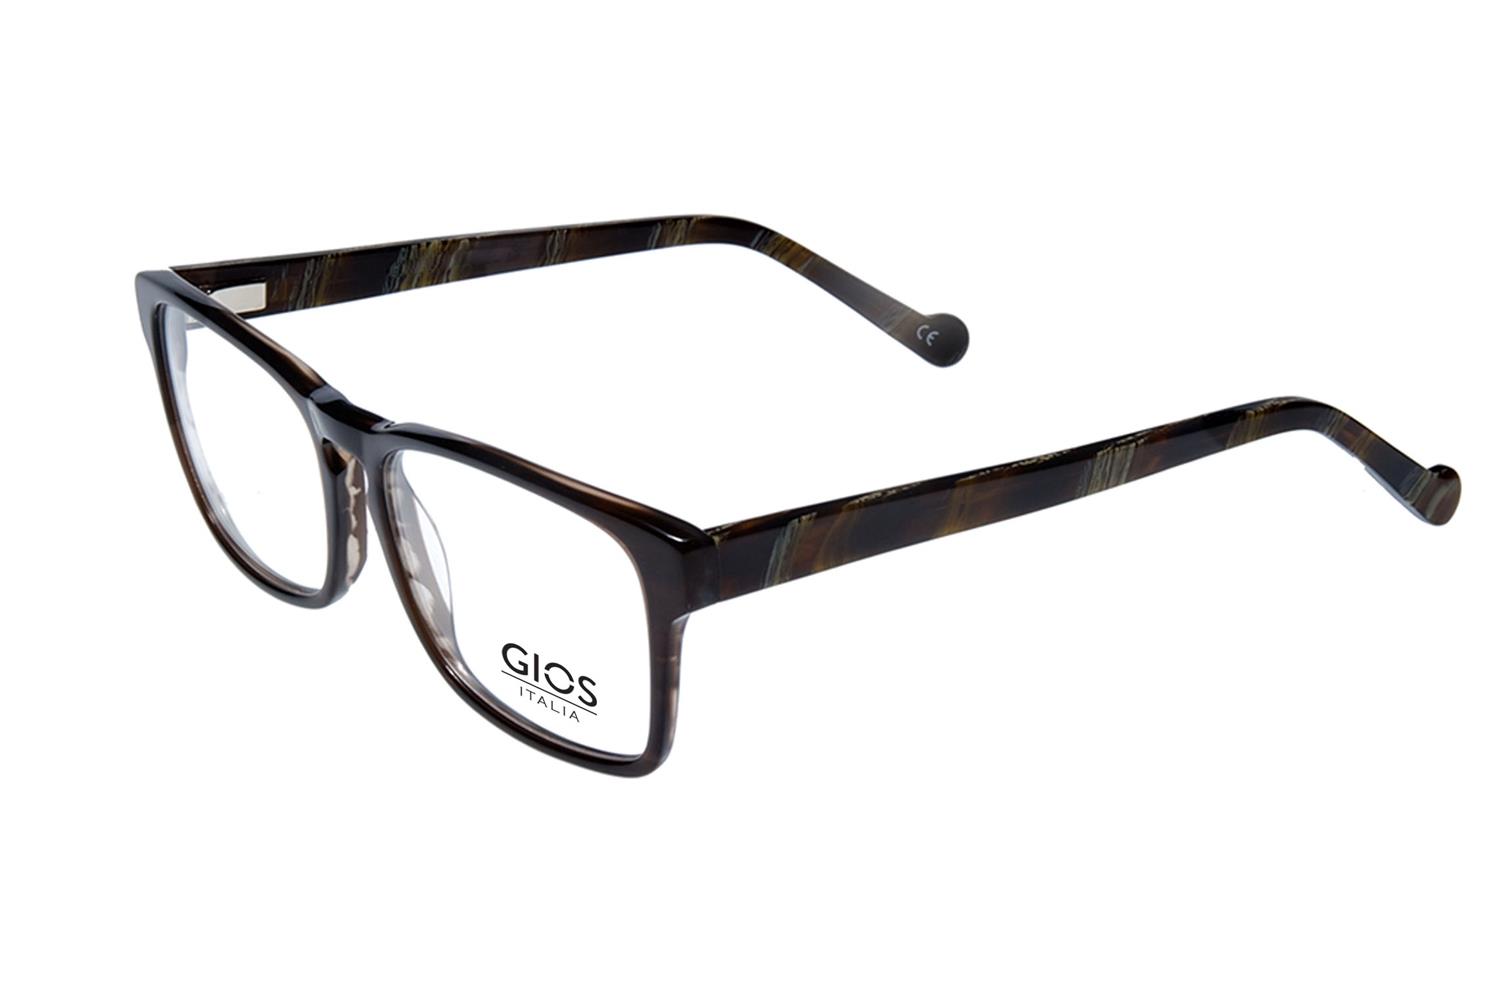 Picture of Gios Italia Eyeglasses RF500030